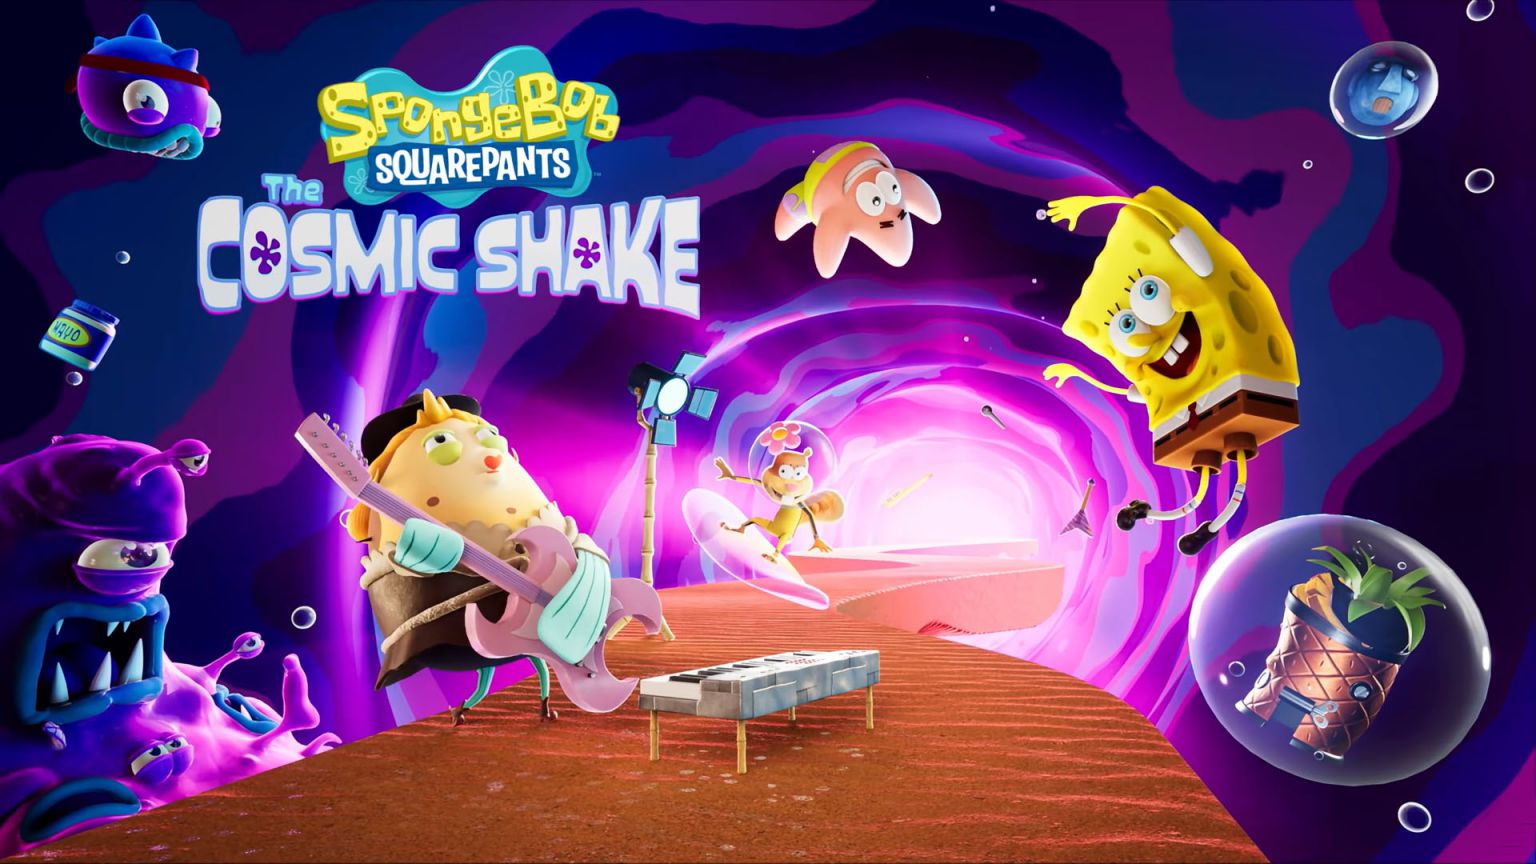 Bob Esponja SpongeBob SquarePants The Cosmic Shake